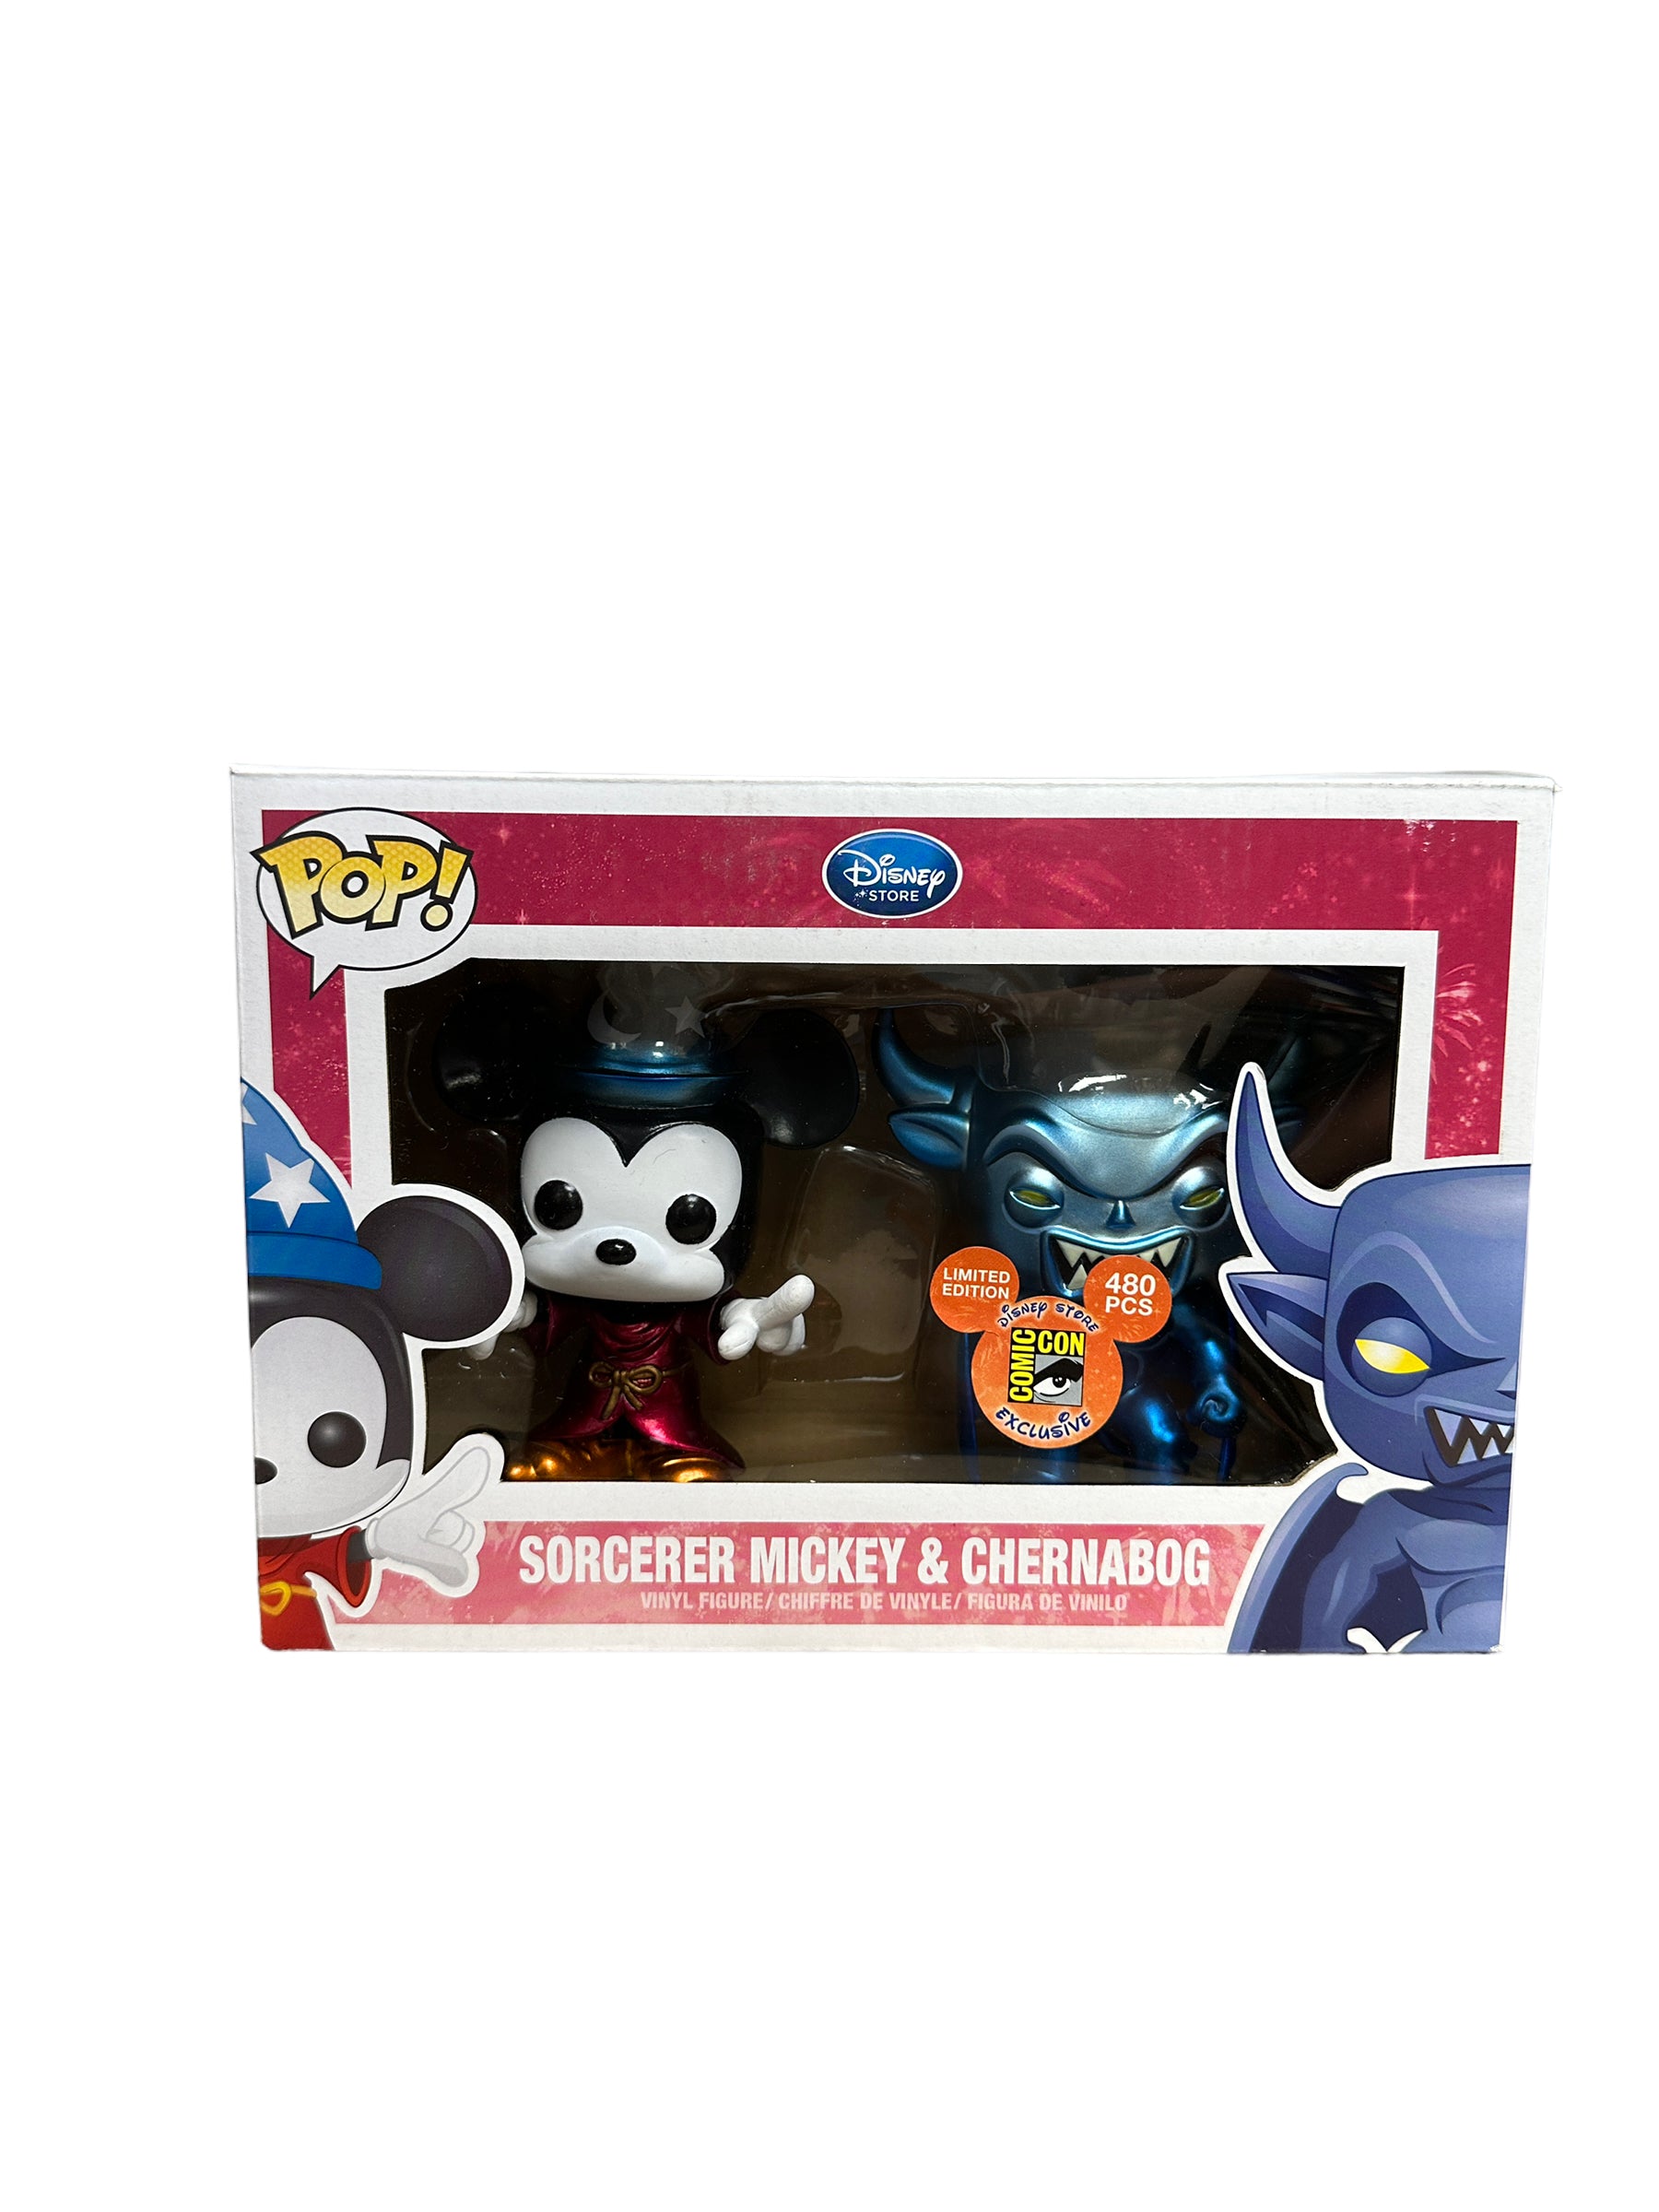 Sorcerer Mickey & Chernabog (Metallic) 2 Pack Funko Pop! - Disney Series 4 - SDCC Disney Store 2012 Exclusive LE480 Pcs - Condition 8/10